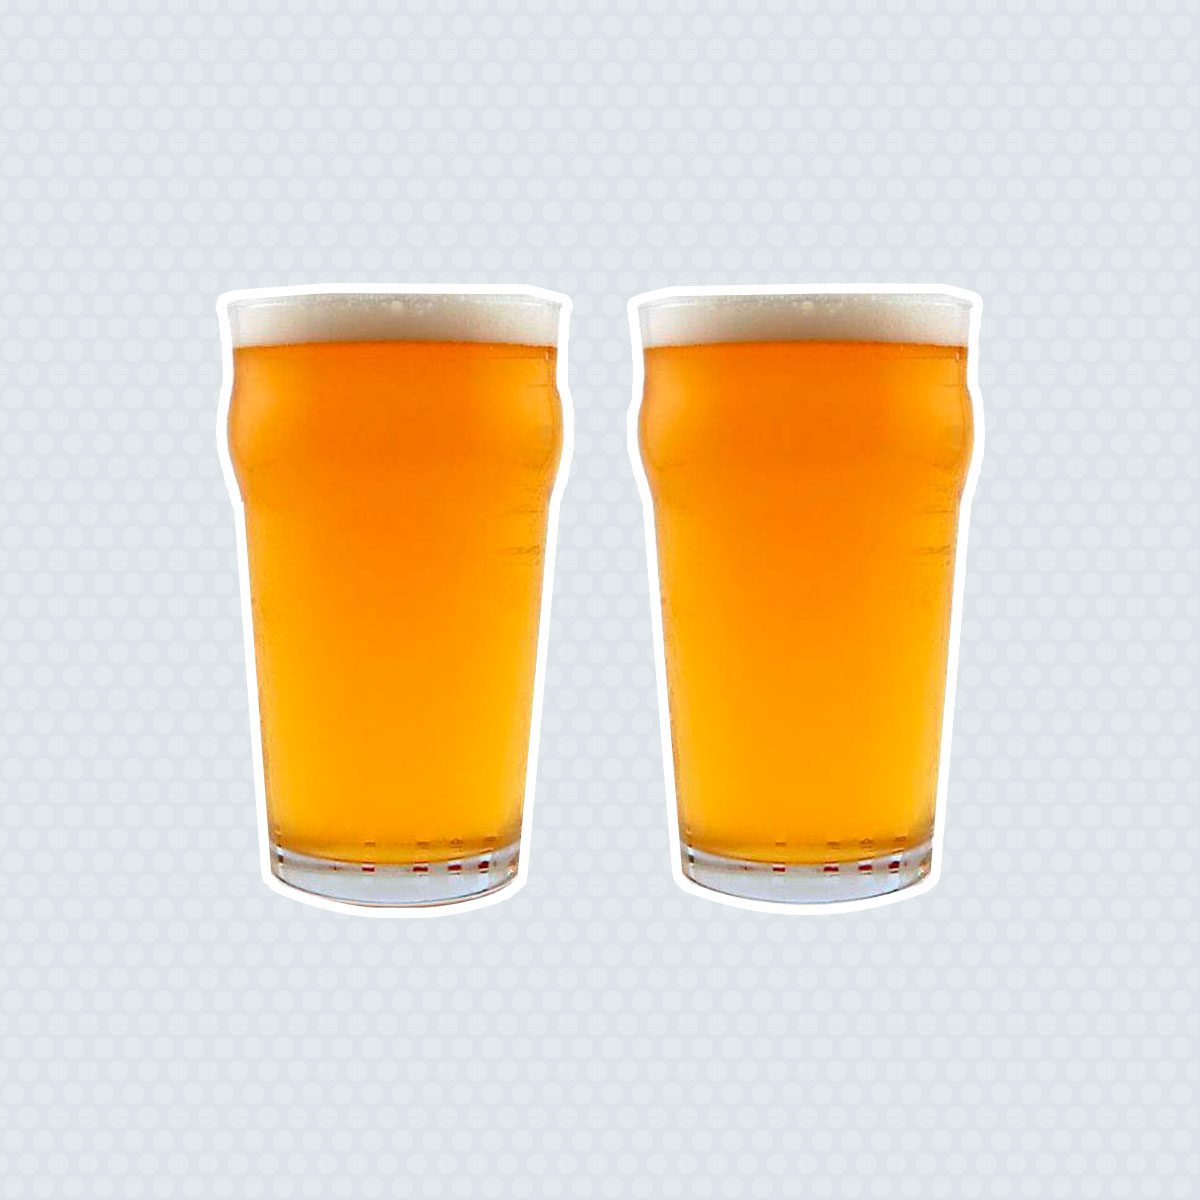 12 Beer Glasses That Will Make Your Beer Taste Even Better